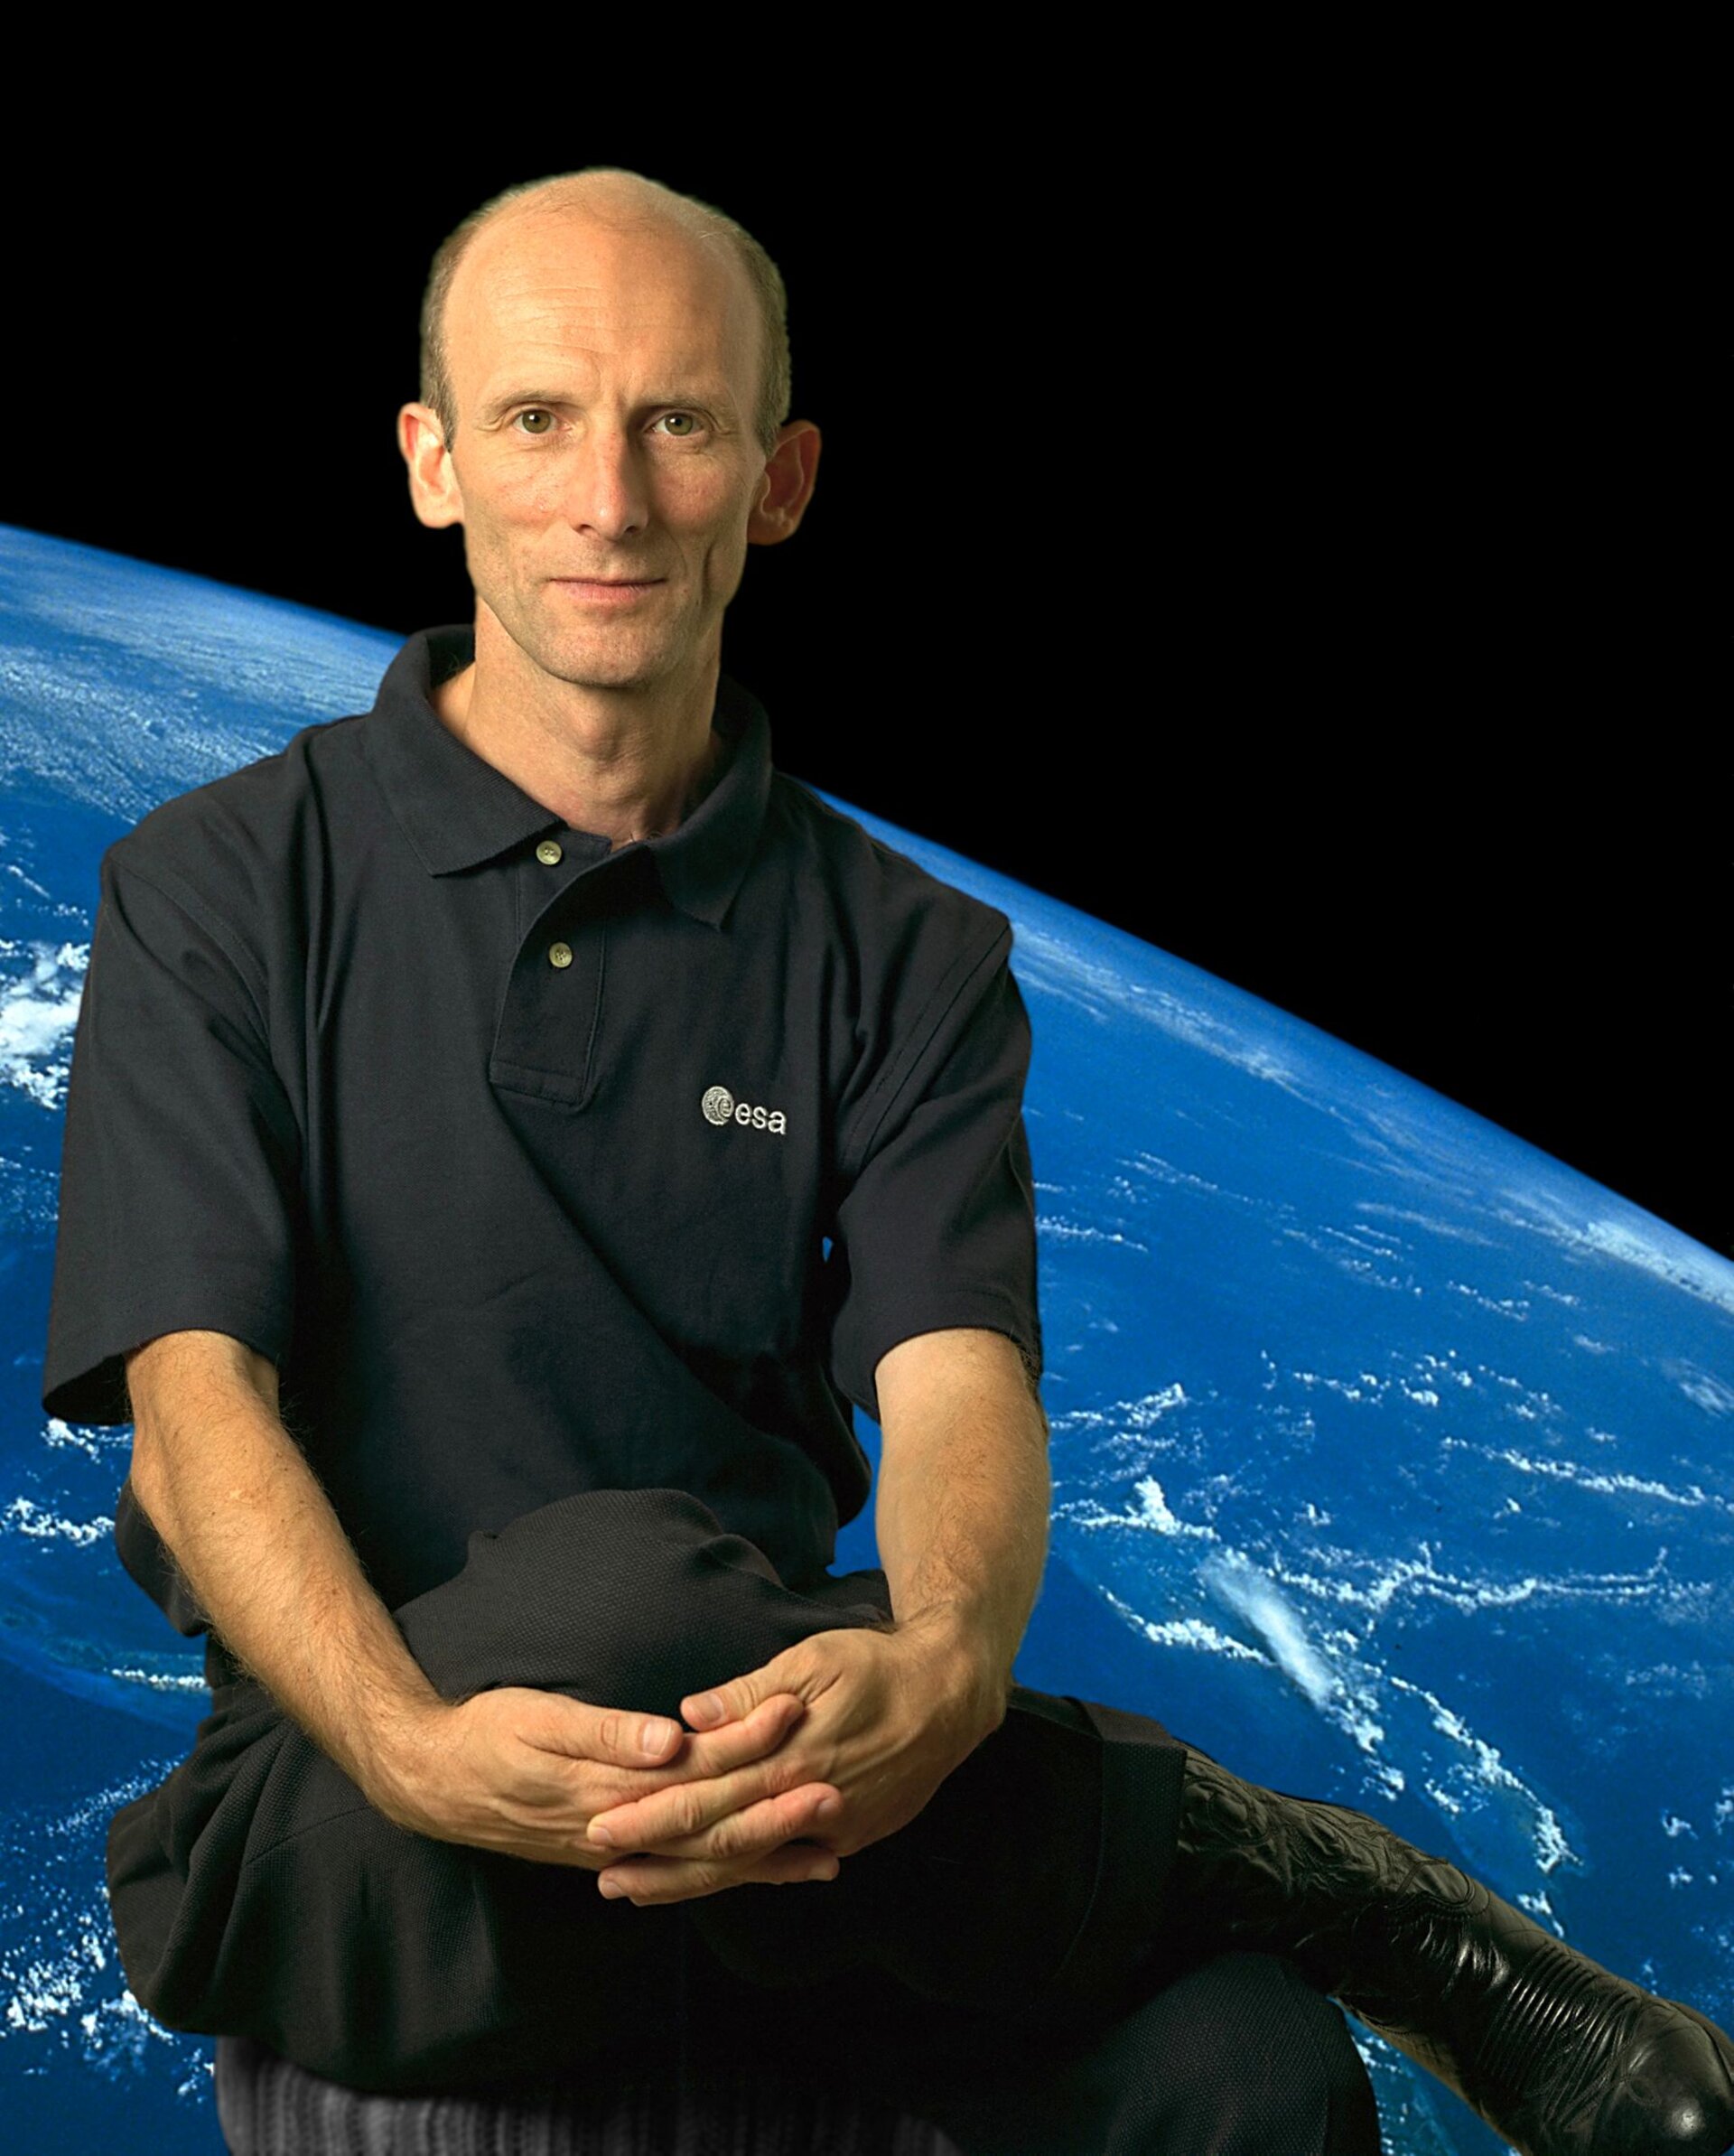 Gerhard Thiele, Astronaut of the European Space Agency (ESA)